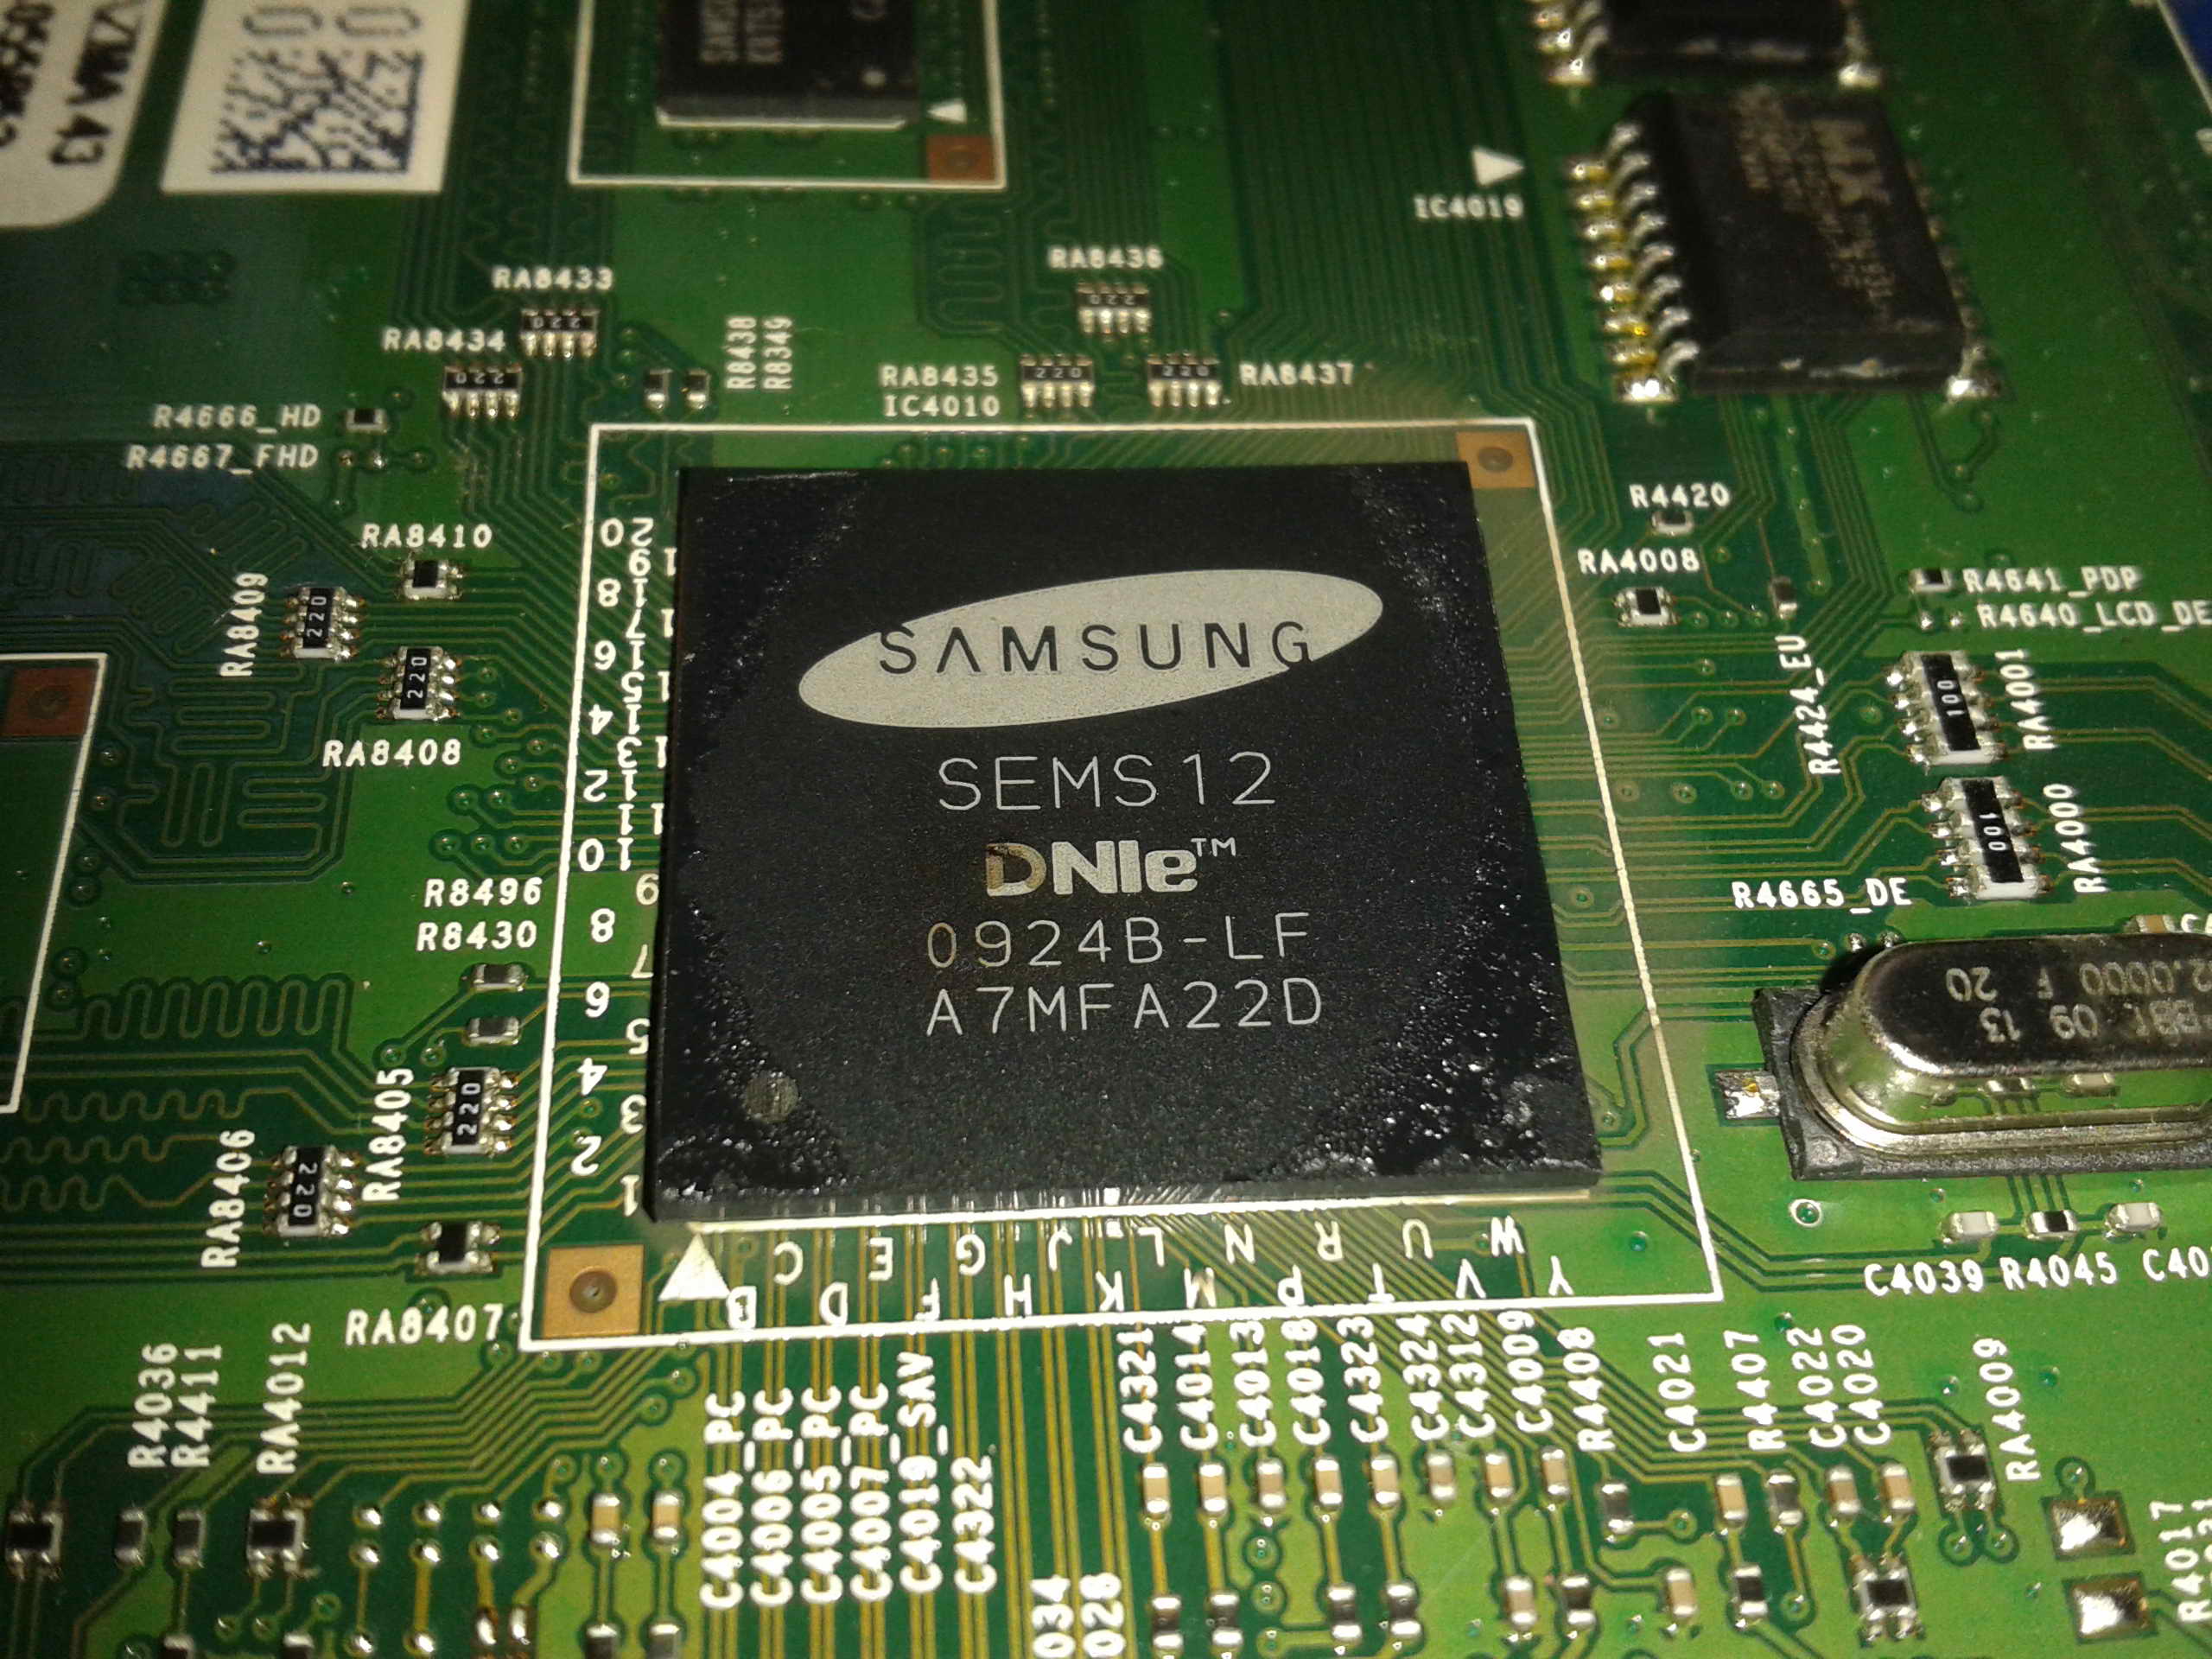 Procesor SMD- BGA